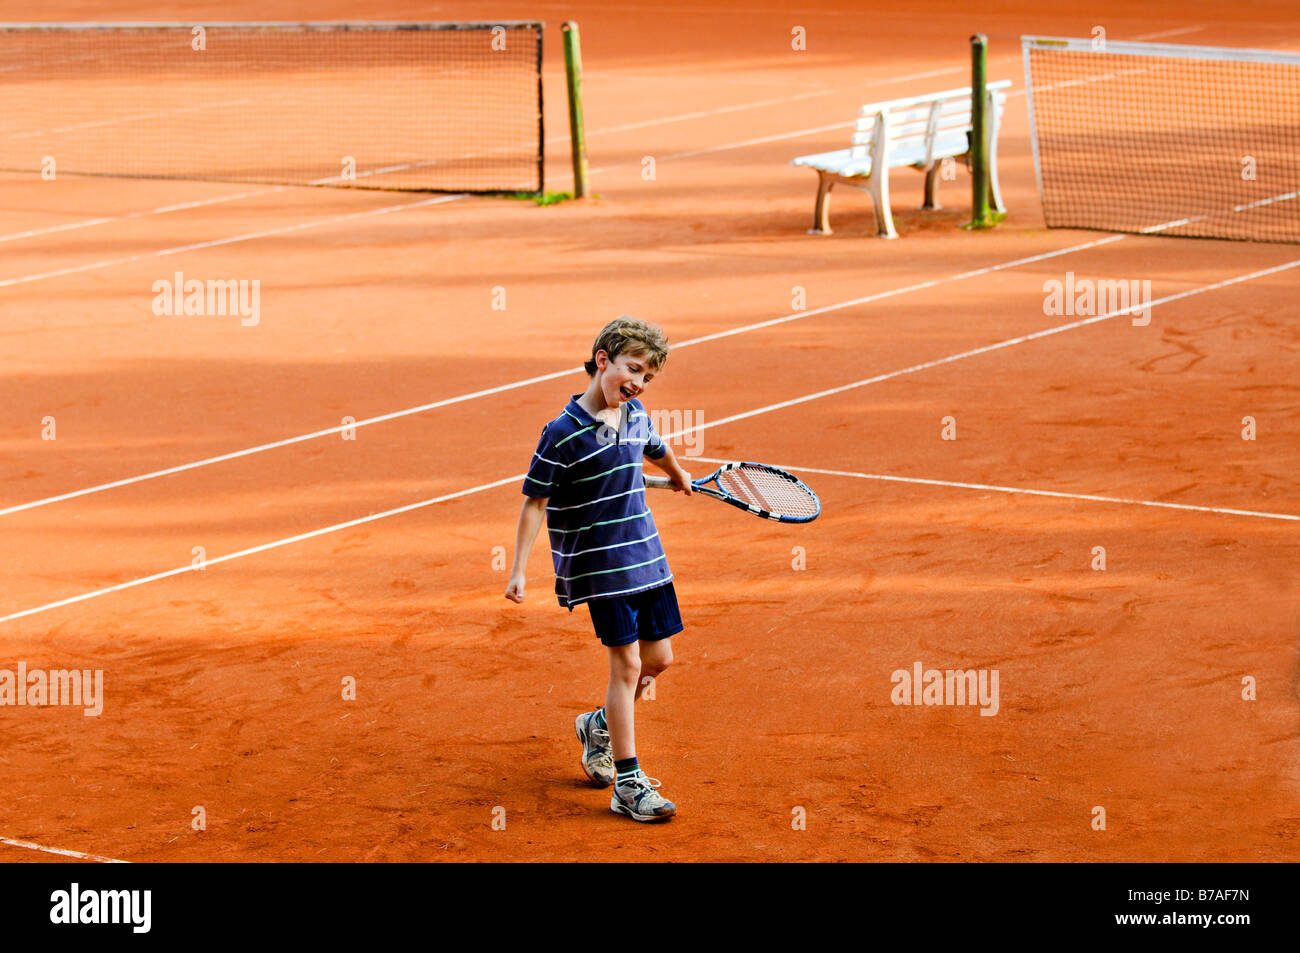 portrait of boy playing tennis Stock Photo